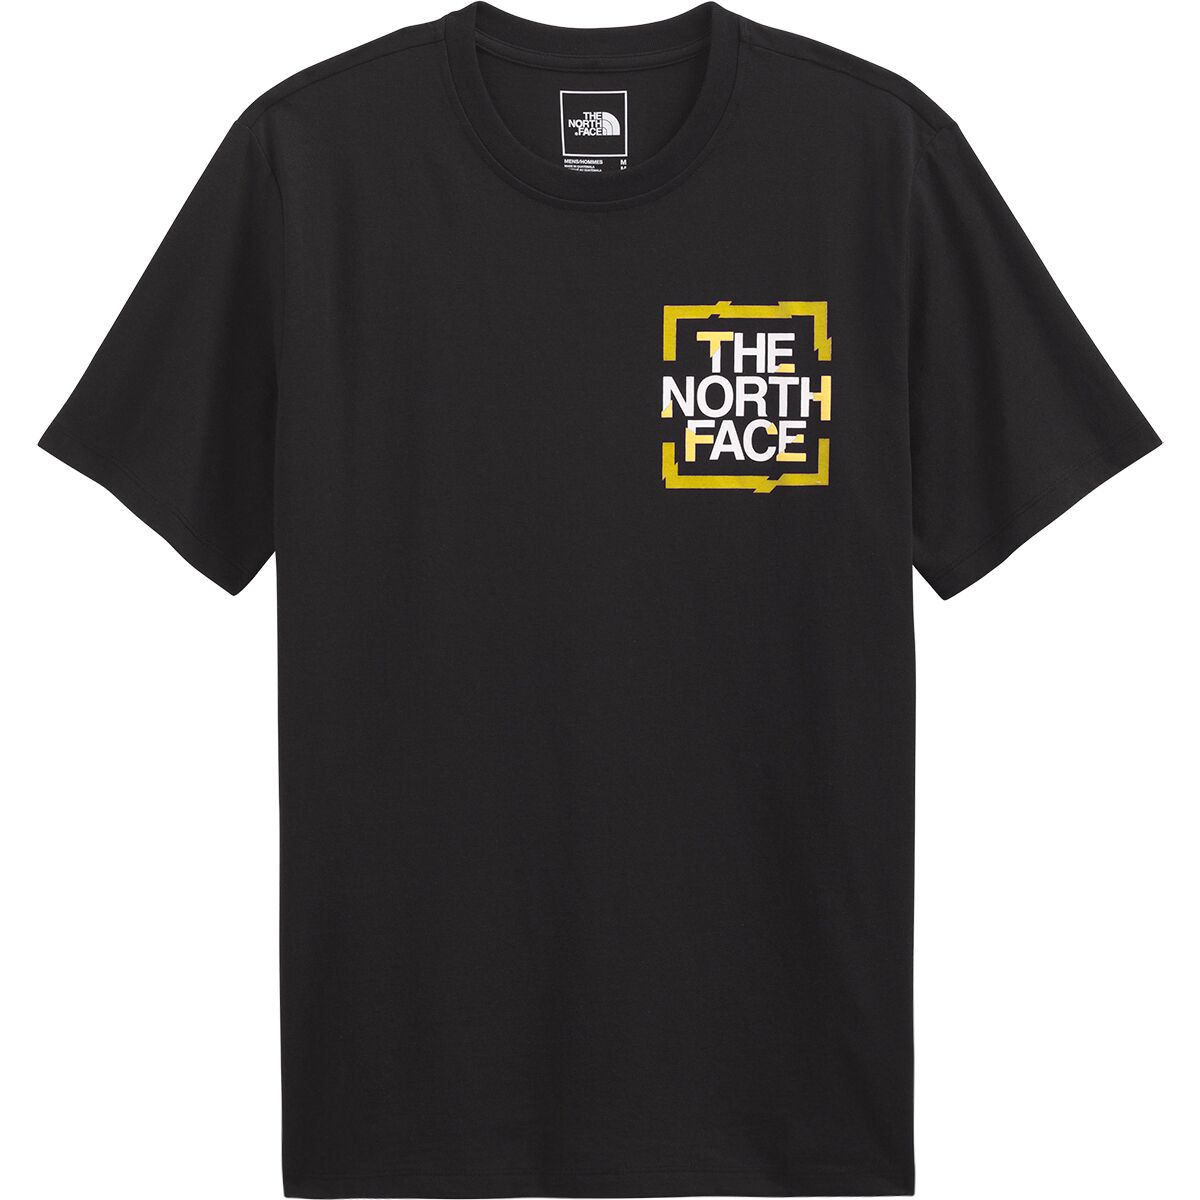 The North Face Coordinates Short-Sleeve T-Shirt - Men's